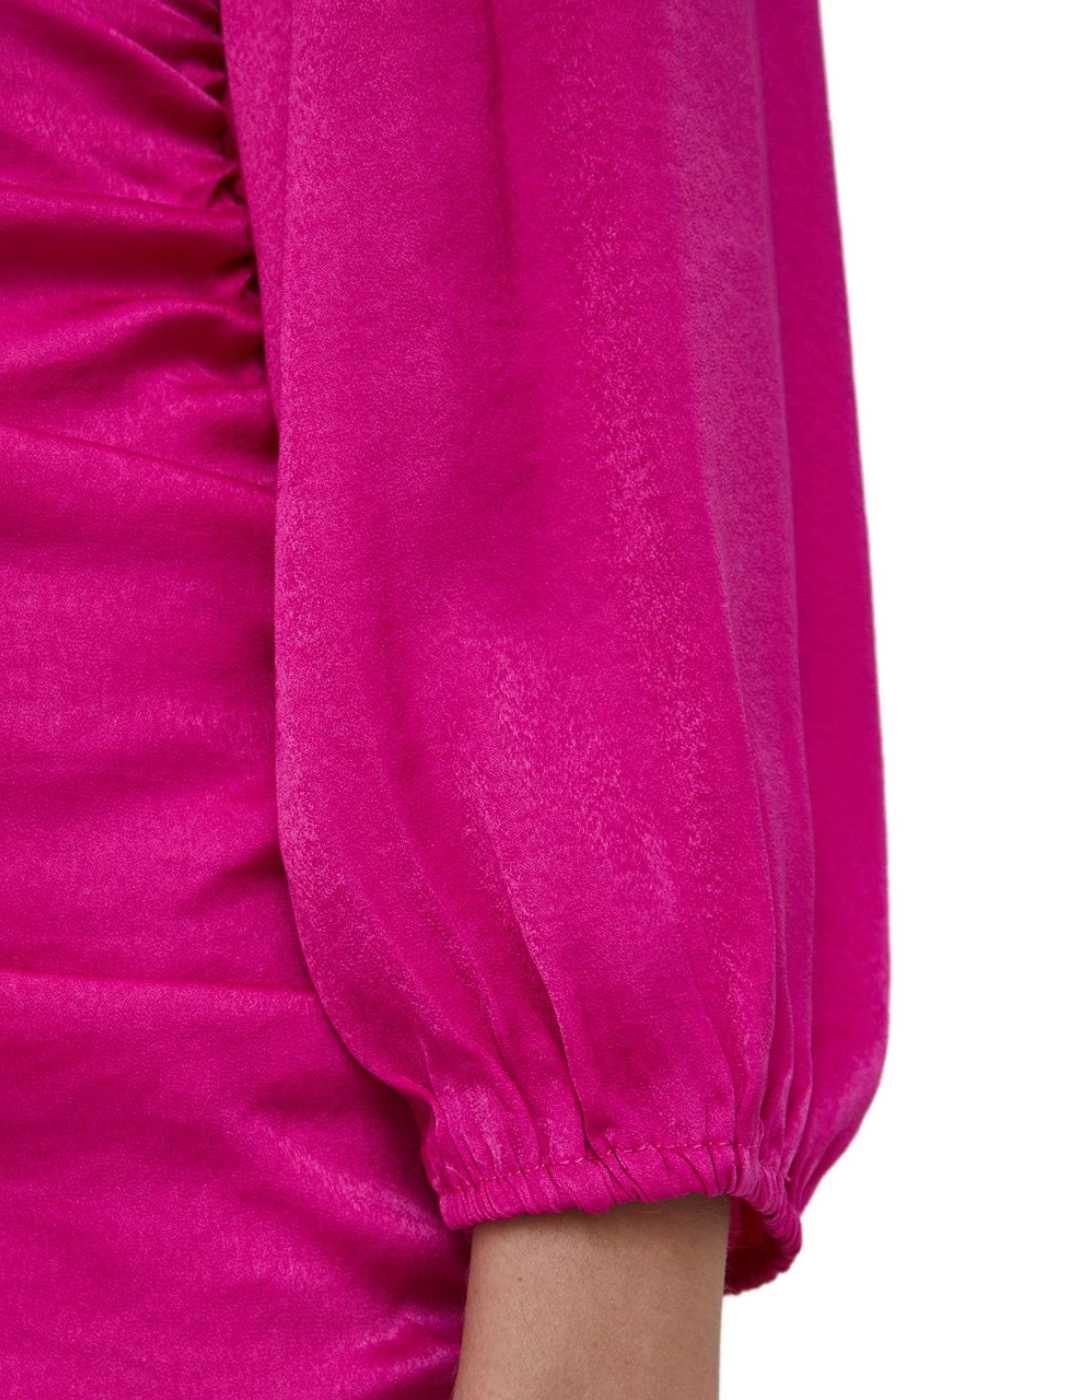 Vestido Only Kendal corto de color rosa fucsia para mujer